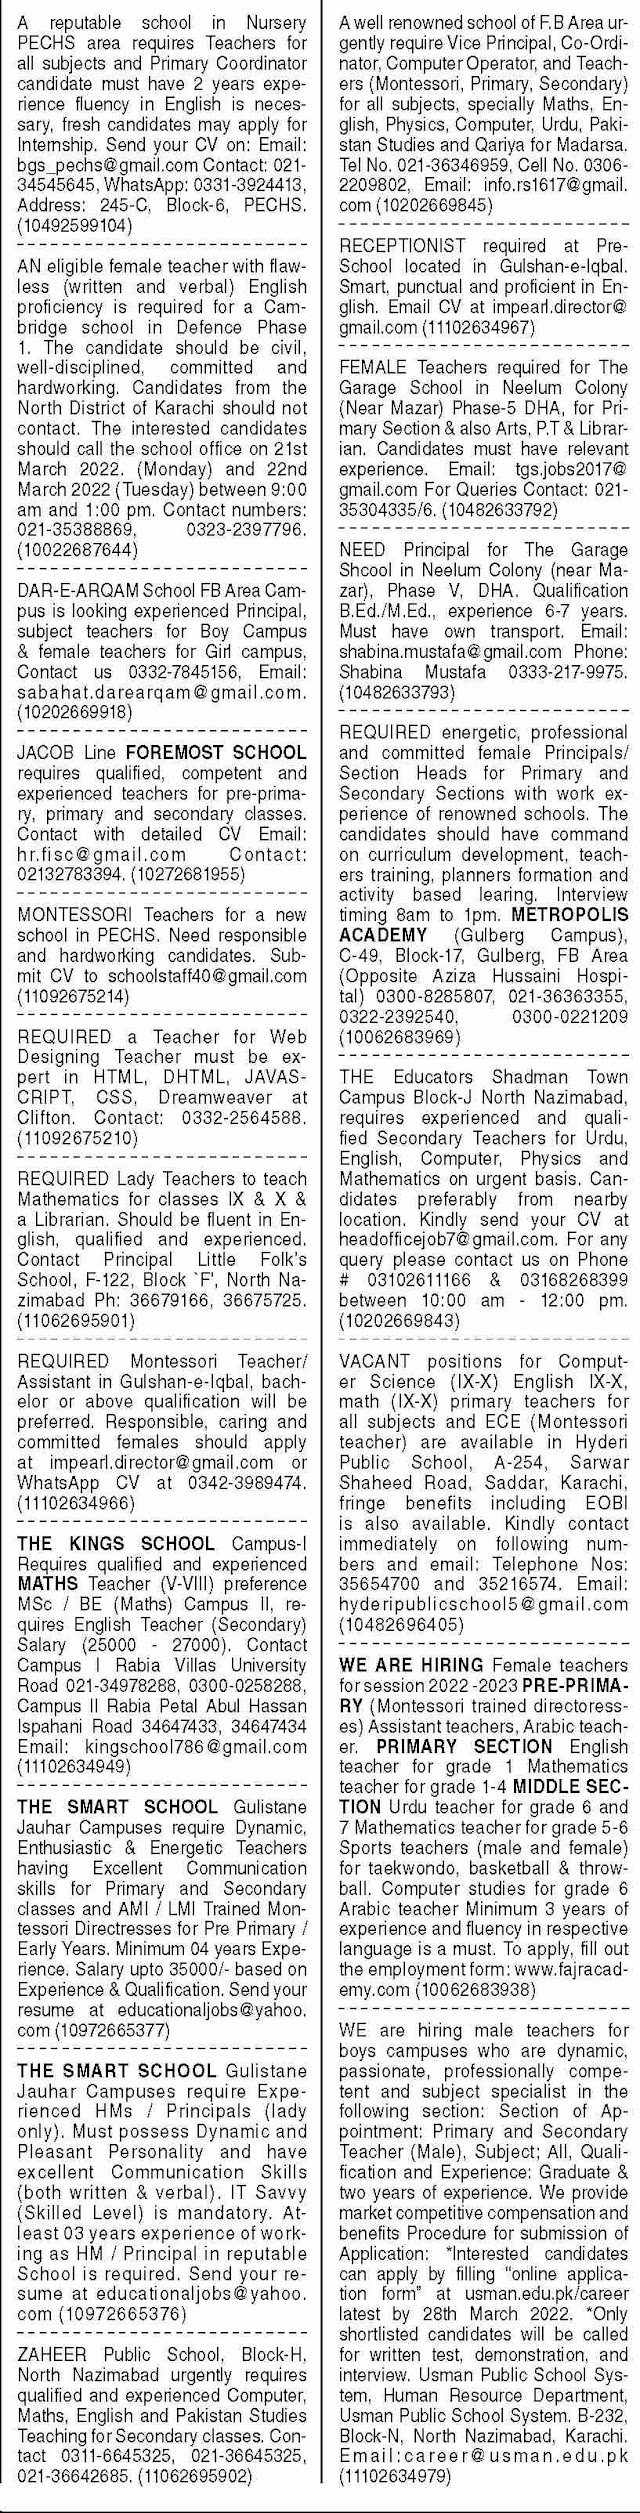 sunday jang newspaper march 2022 latest jobs in karachi - jobs in pakistan 2022